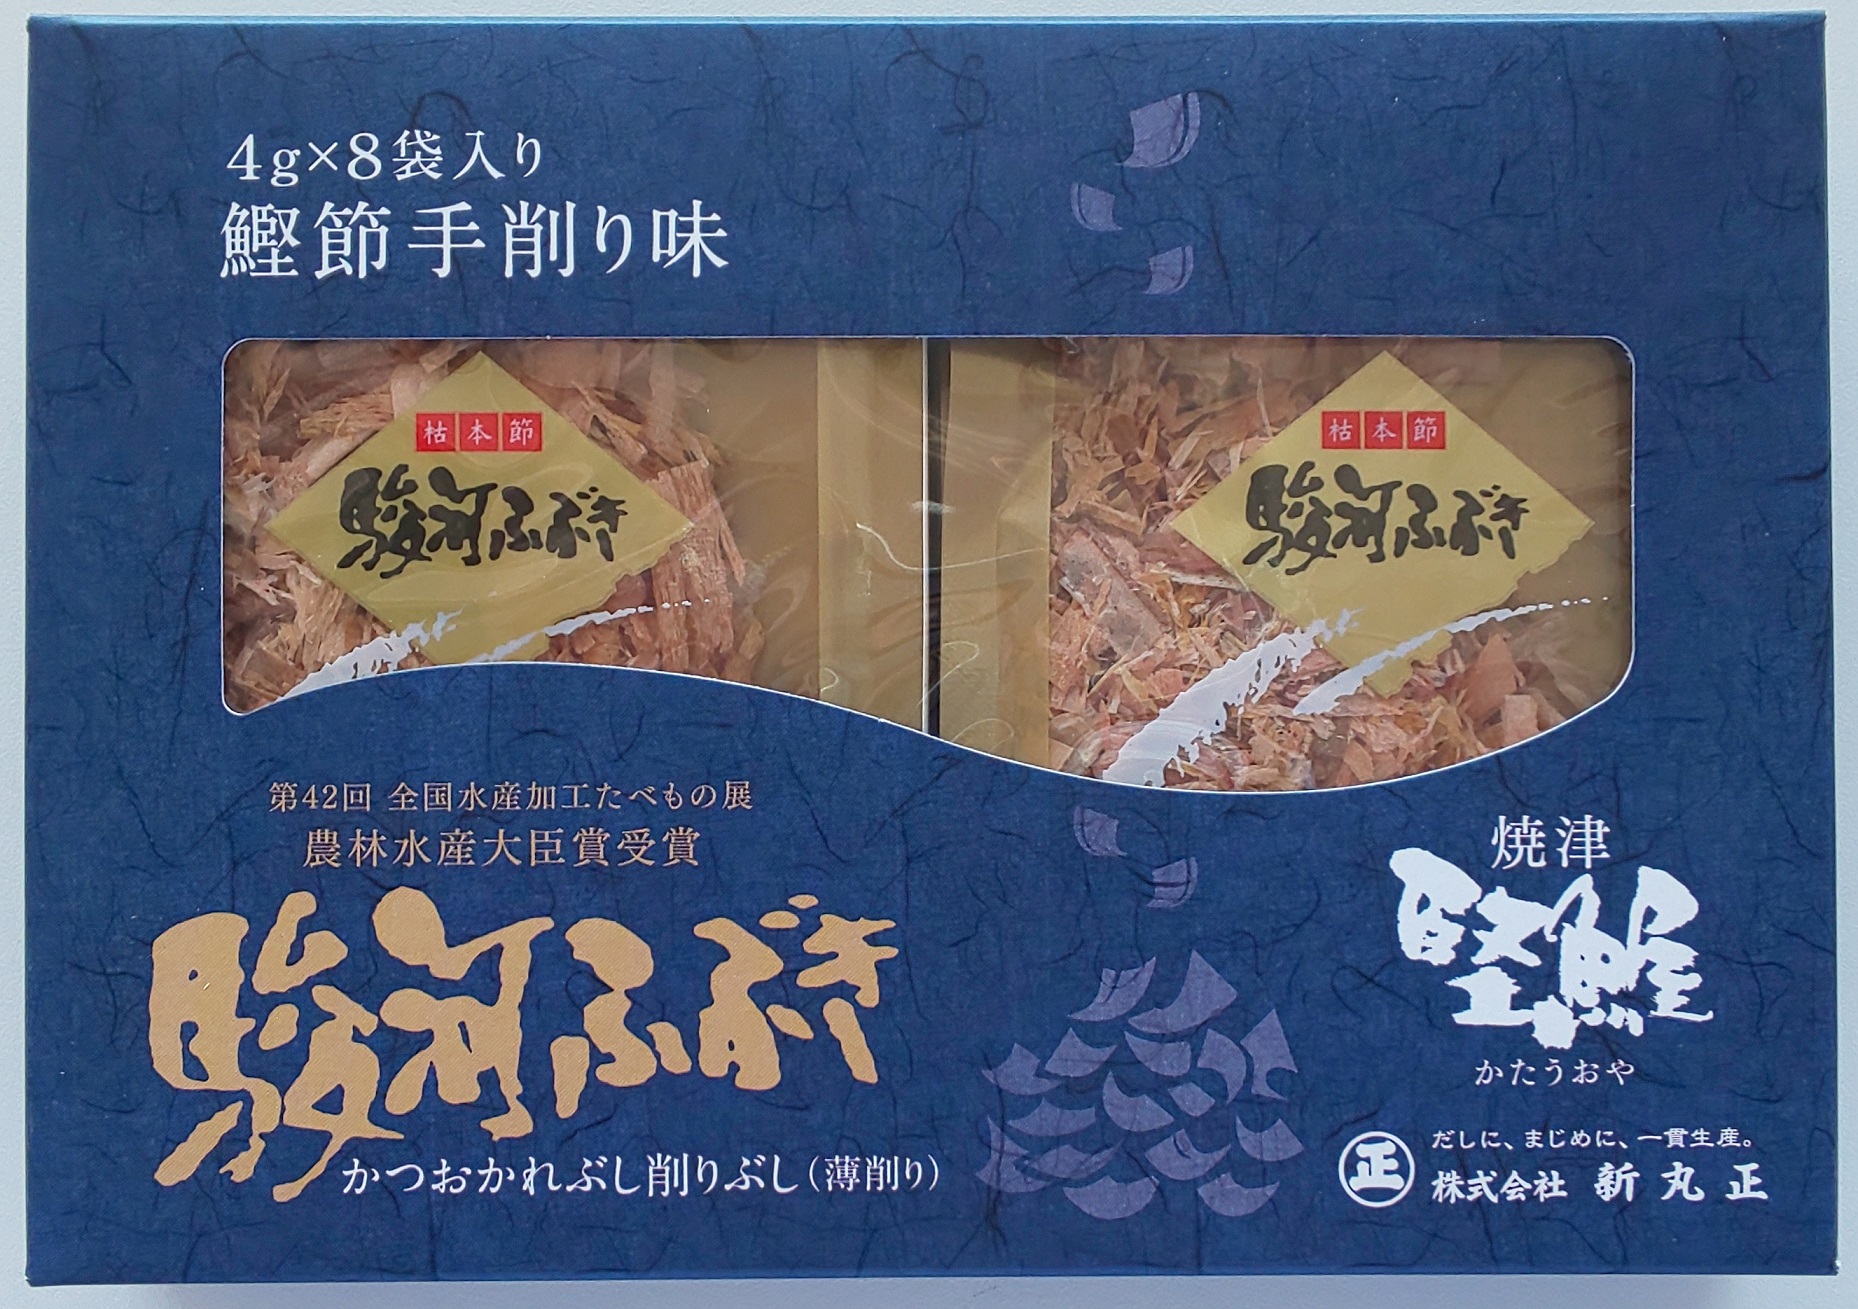 Suruga Fubuki box 4gx8 (Dried bonito shavings)